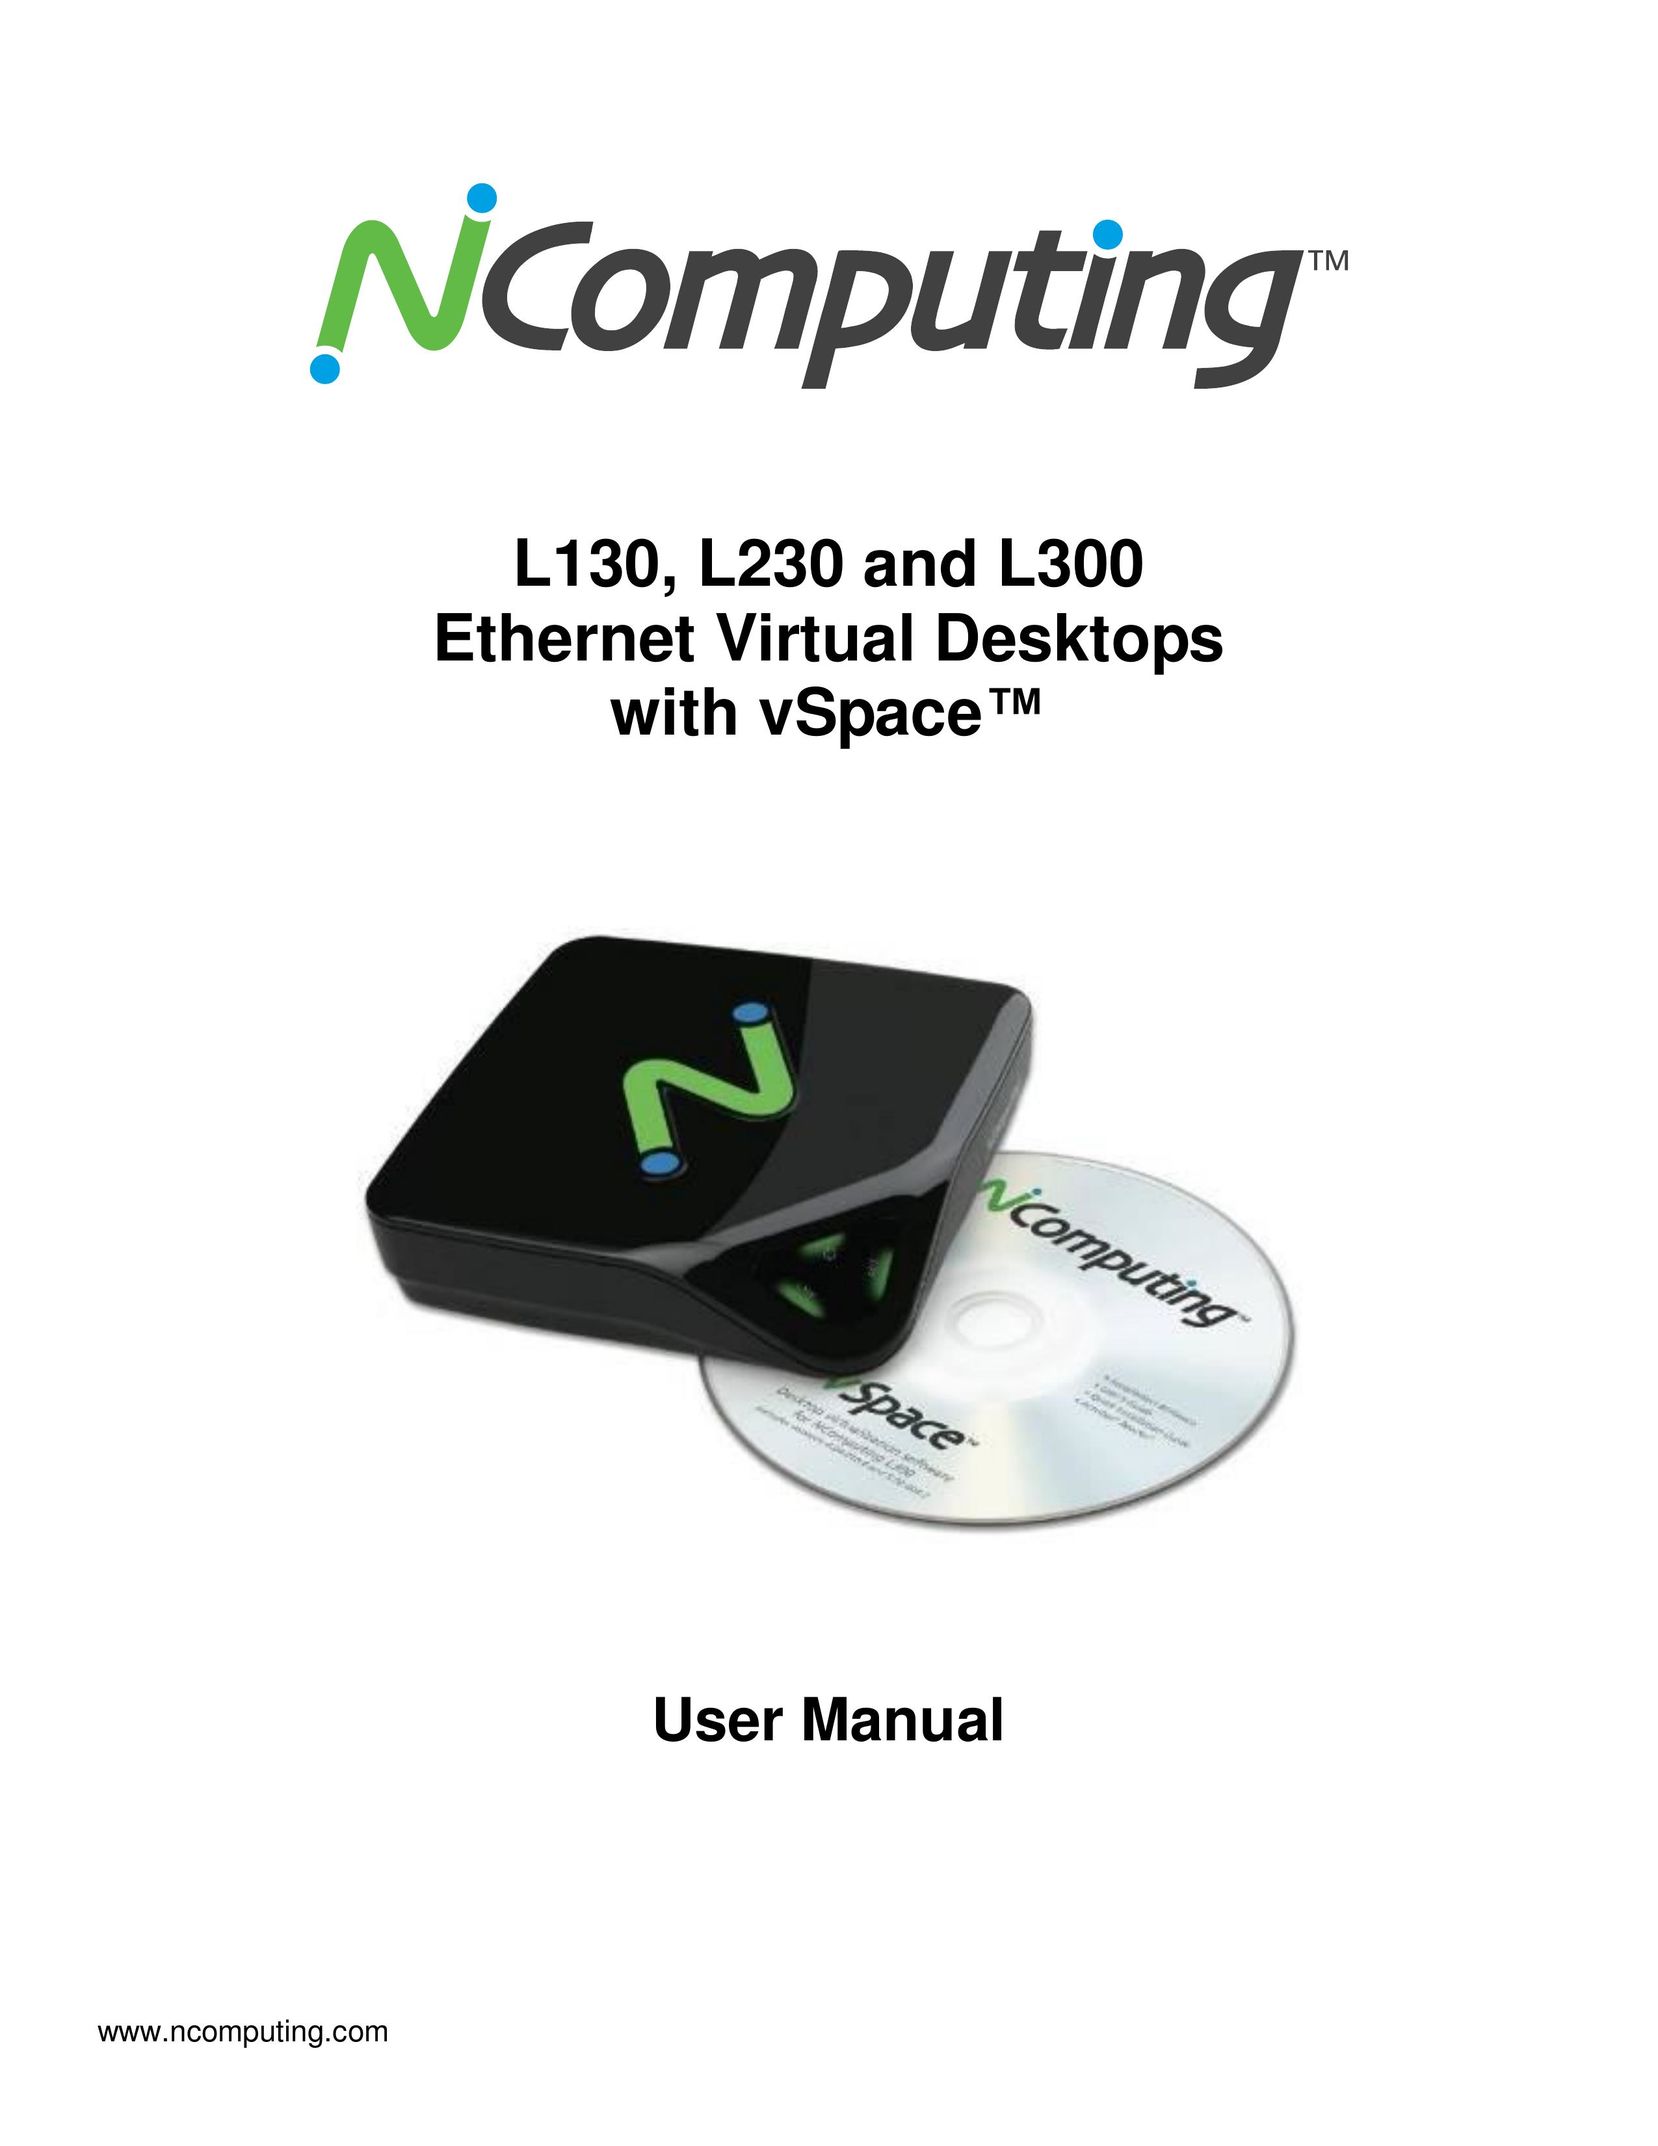 NComputing L230 Laminator User Manual